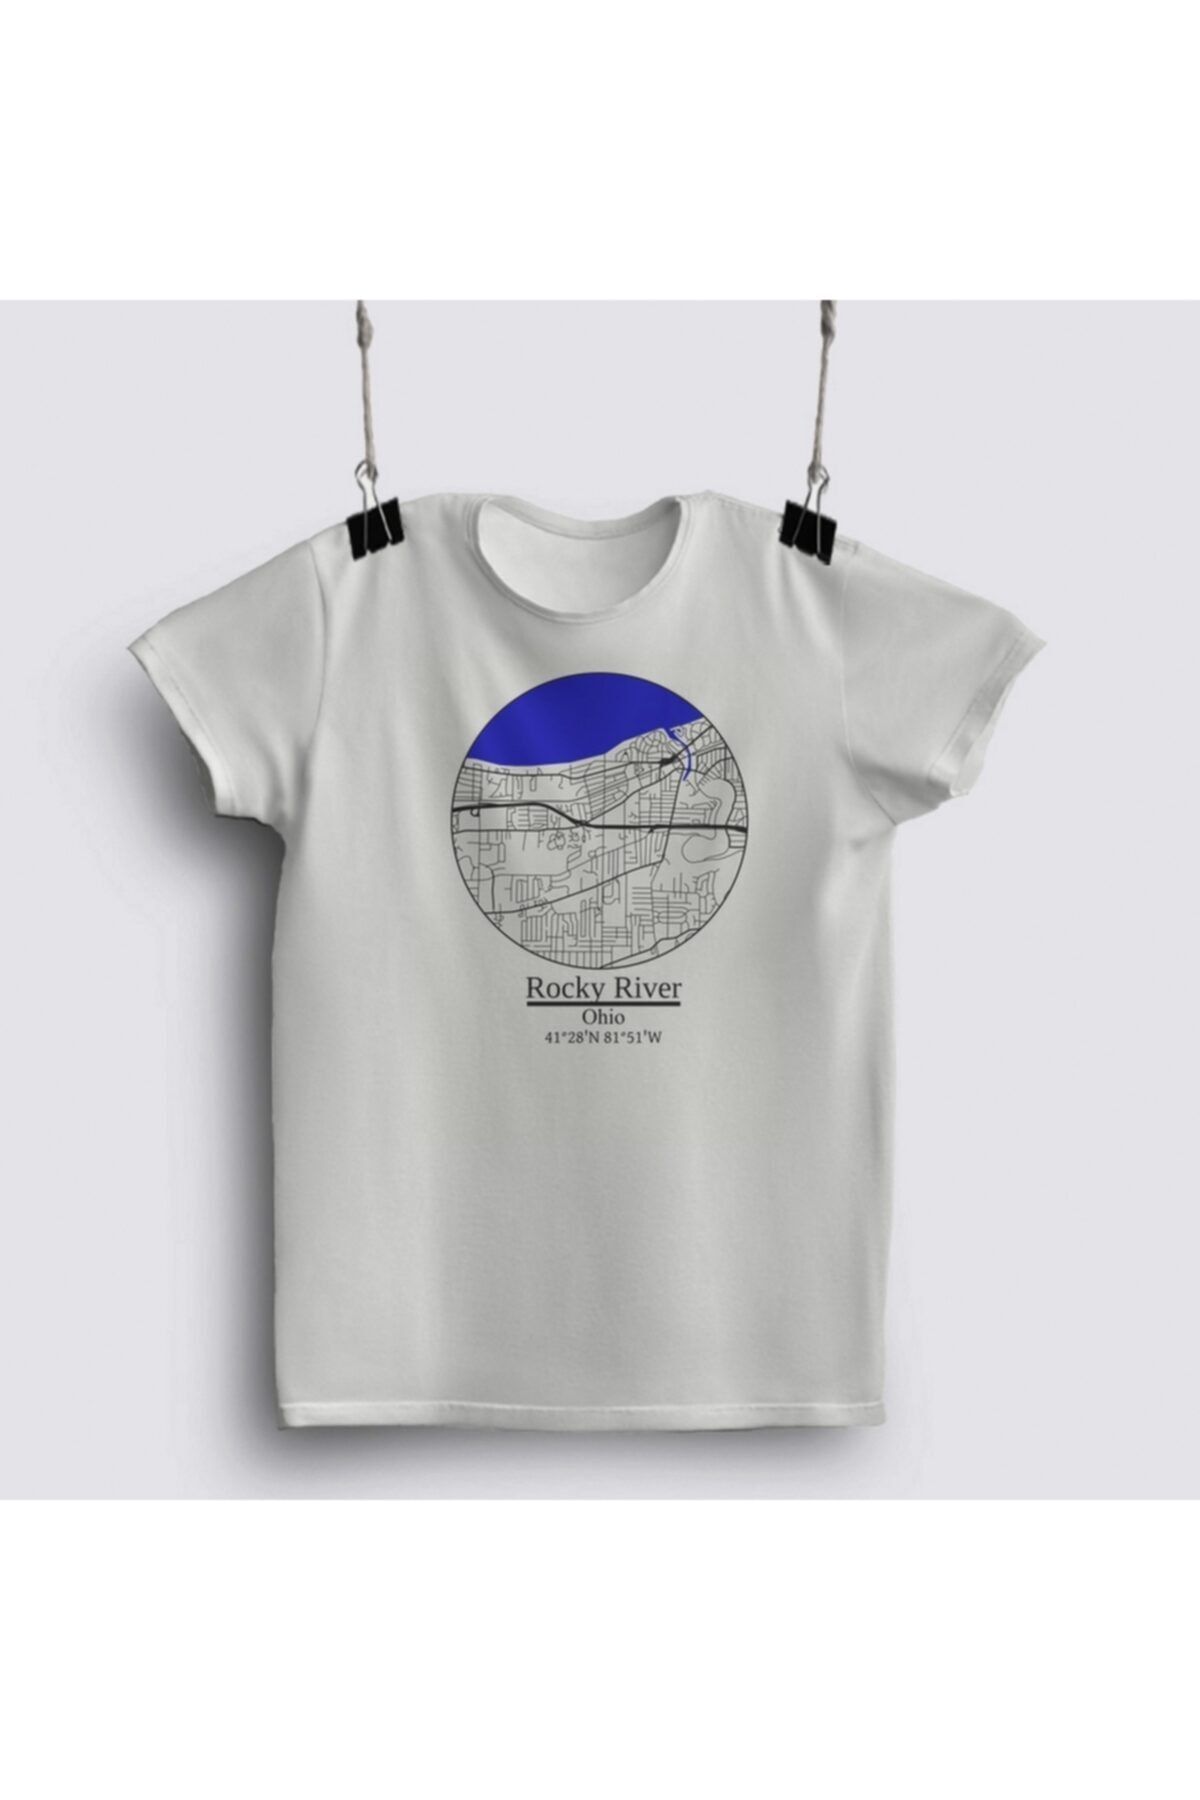 Fizello West St. Paul, Minnesota Road Map Art - Blue Rivers And Dark Roads T-shirt